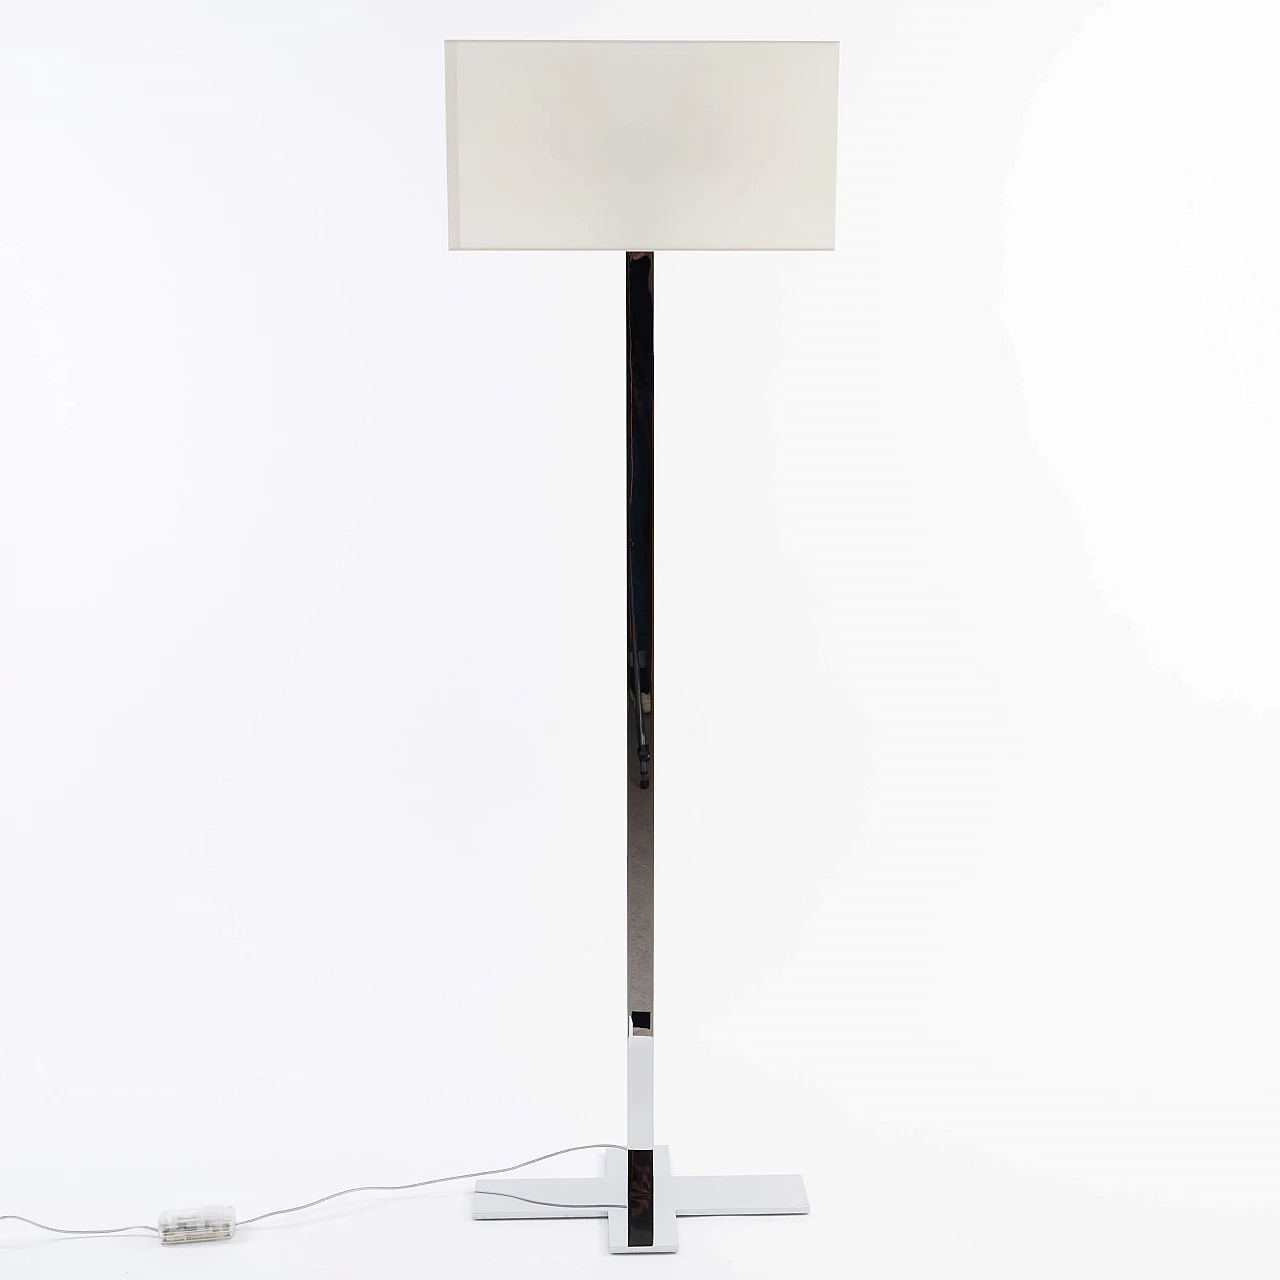 Leukon lamp by Antonio Citterio for Maxalto 2